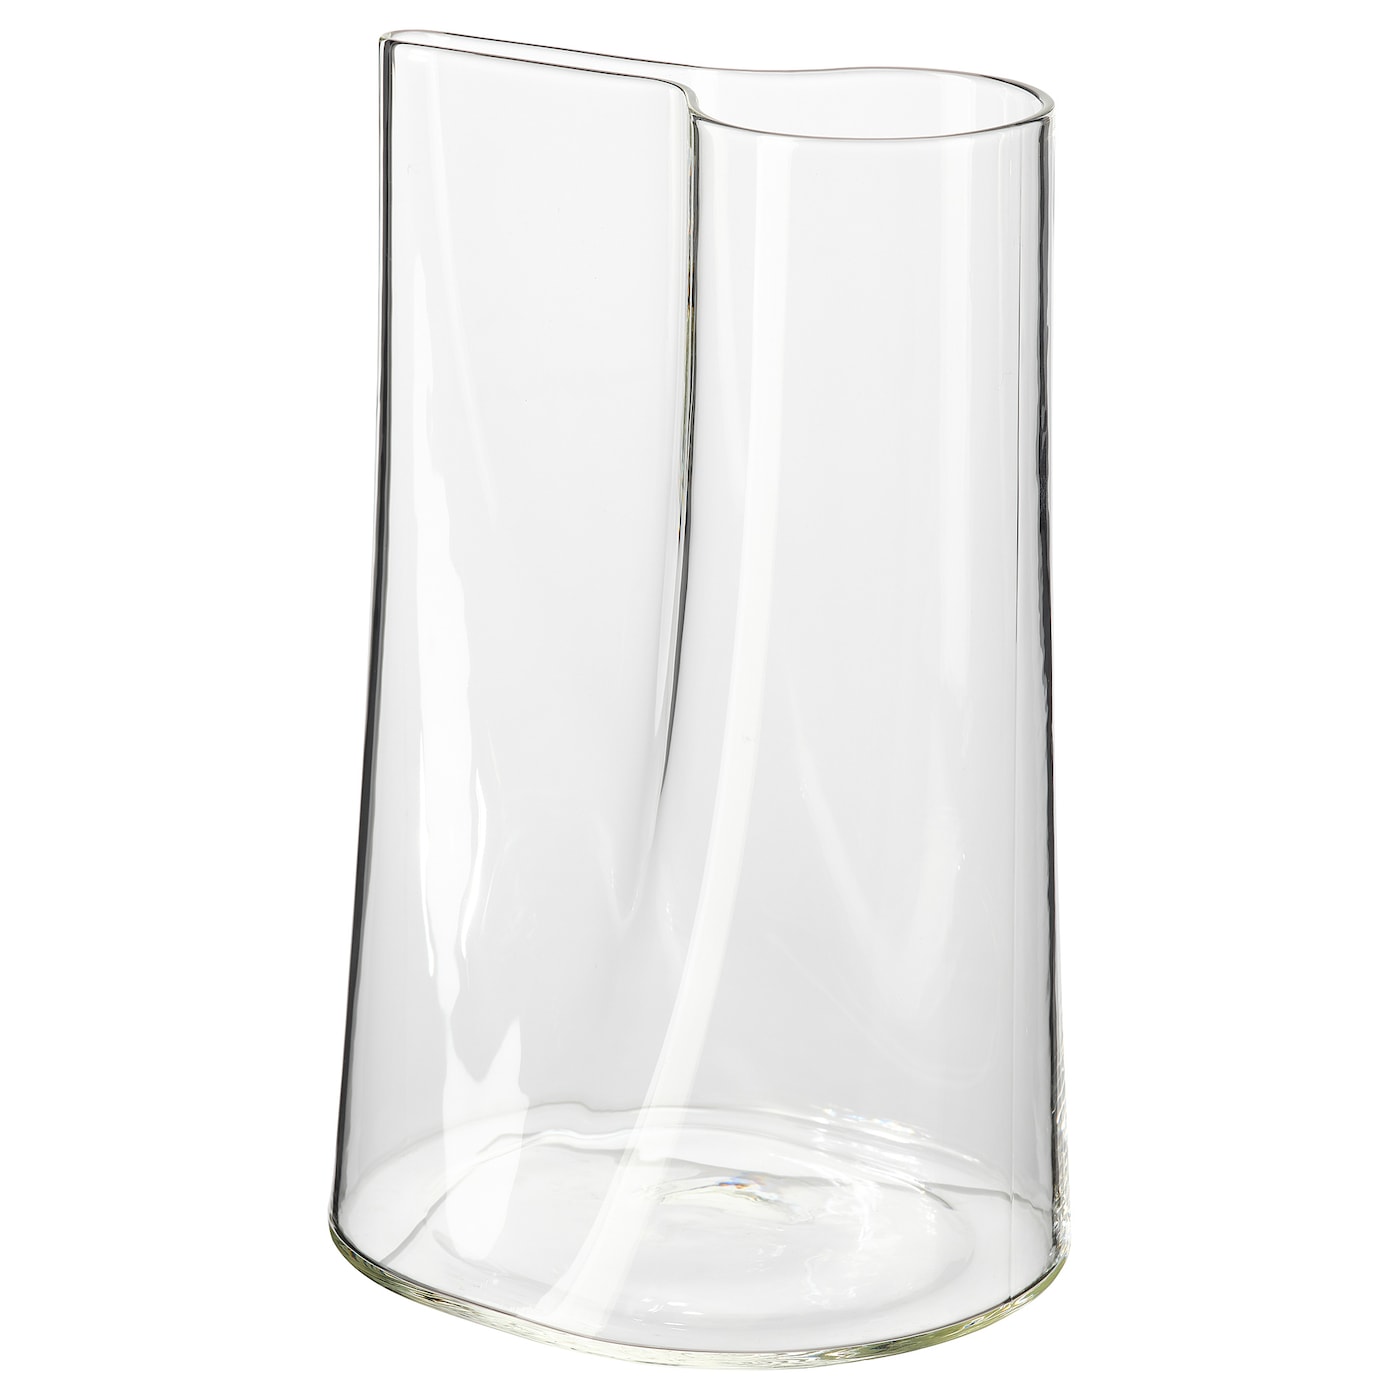 CHILIFRUKT ЧИЛИФРУКТ Ваза/лейка, прозрачное стекло, 21 см IKEA 2 шт ваза для творчества деревянная ваза декоративная бутылка для цветов глиняная ваза держатель для цветов